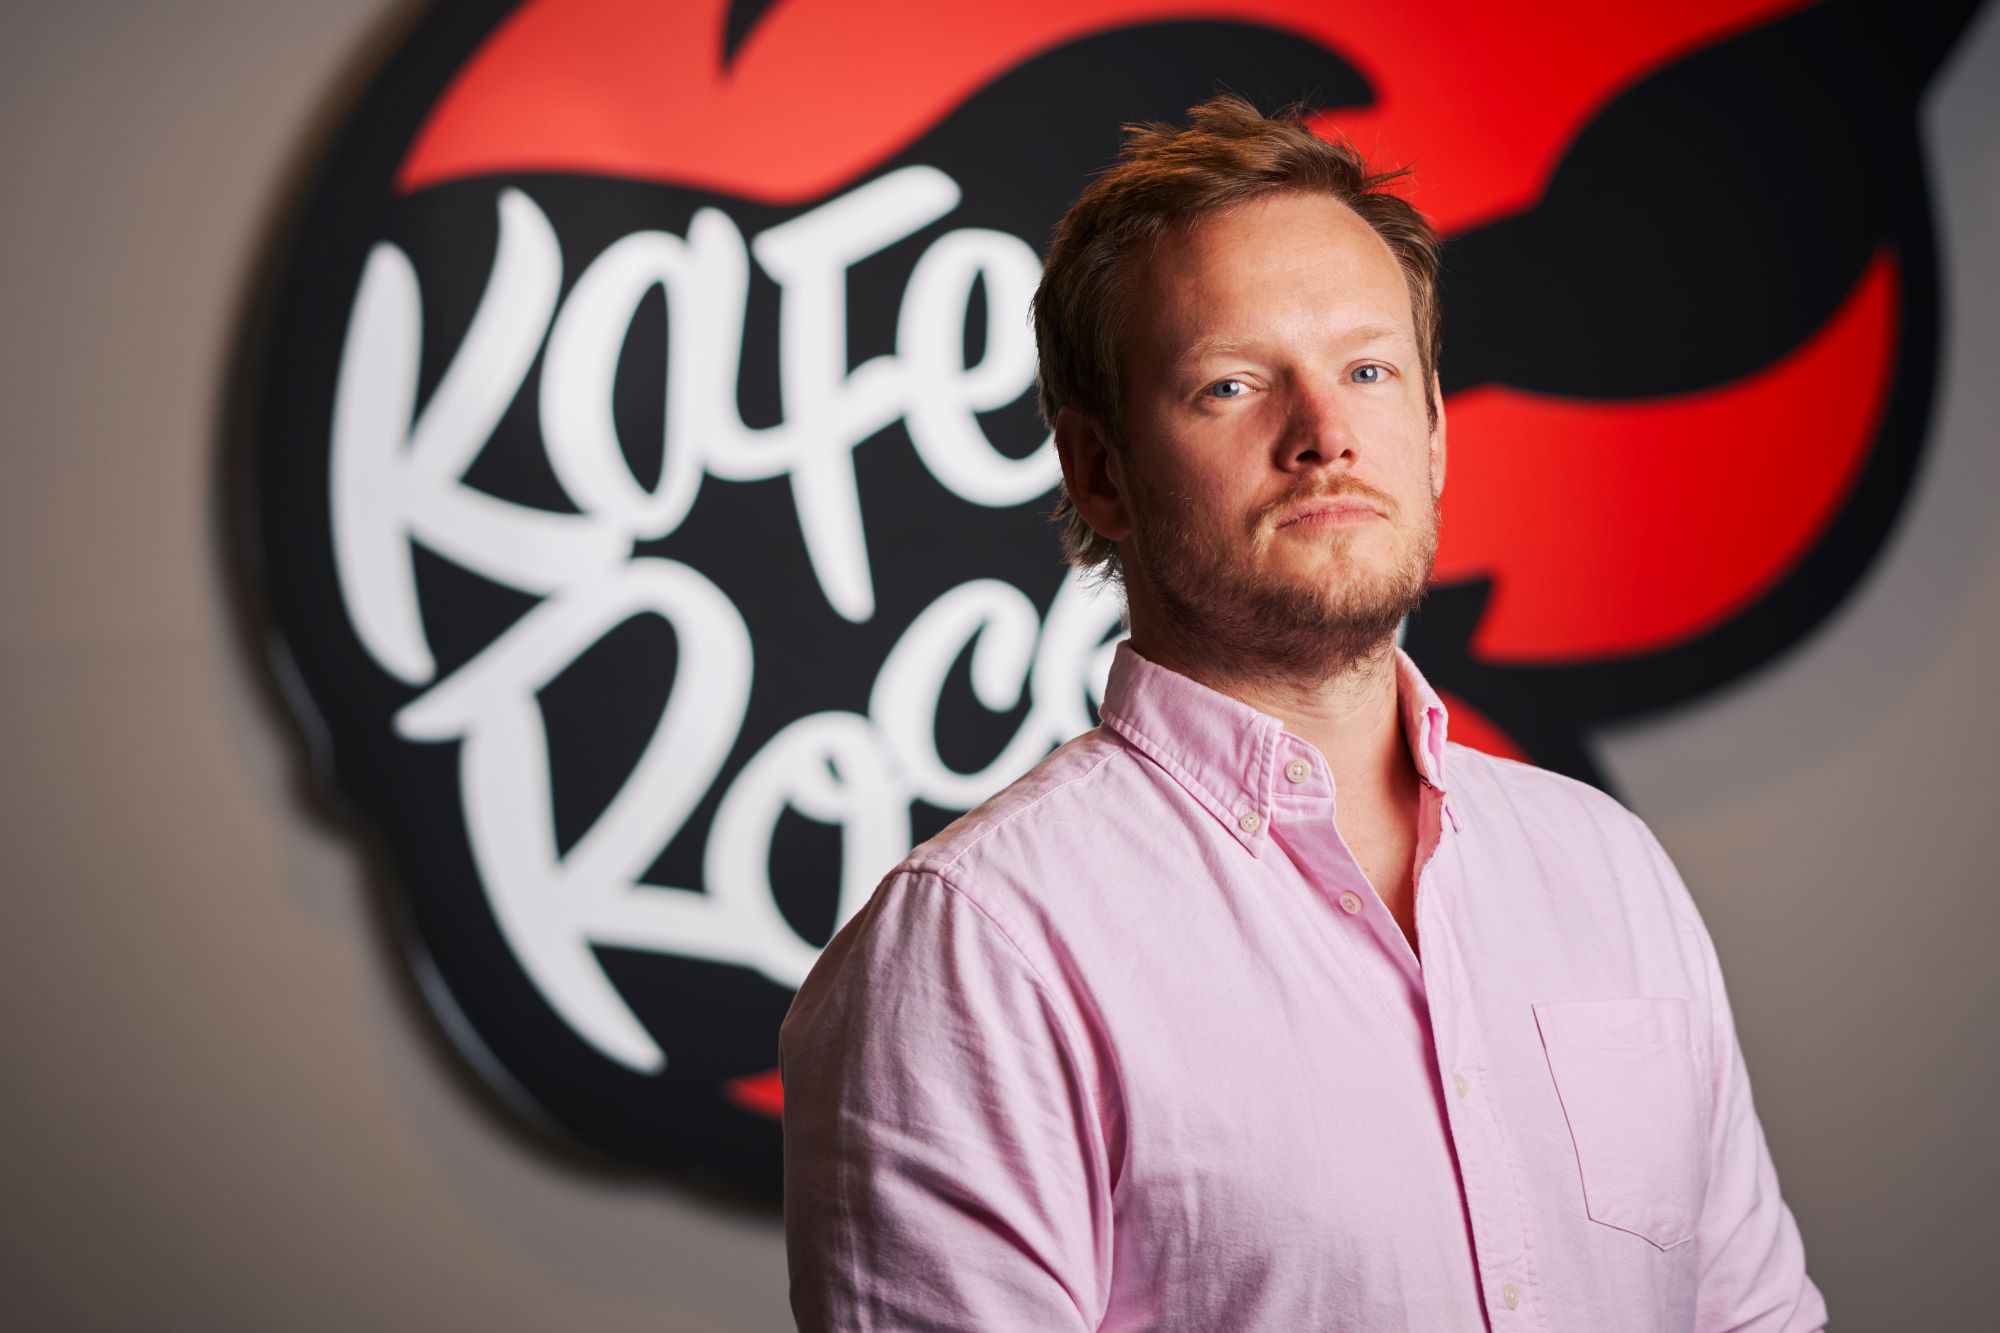 kafe rocks CEO Simon Pilkington